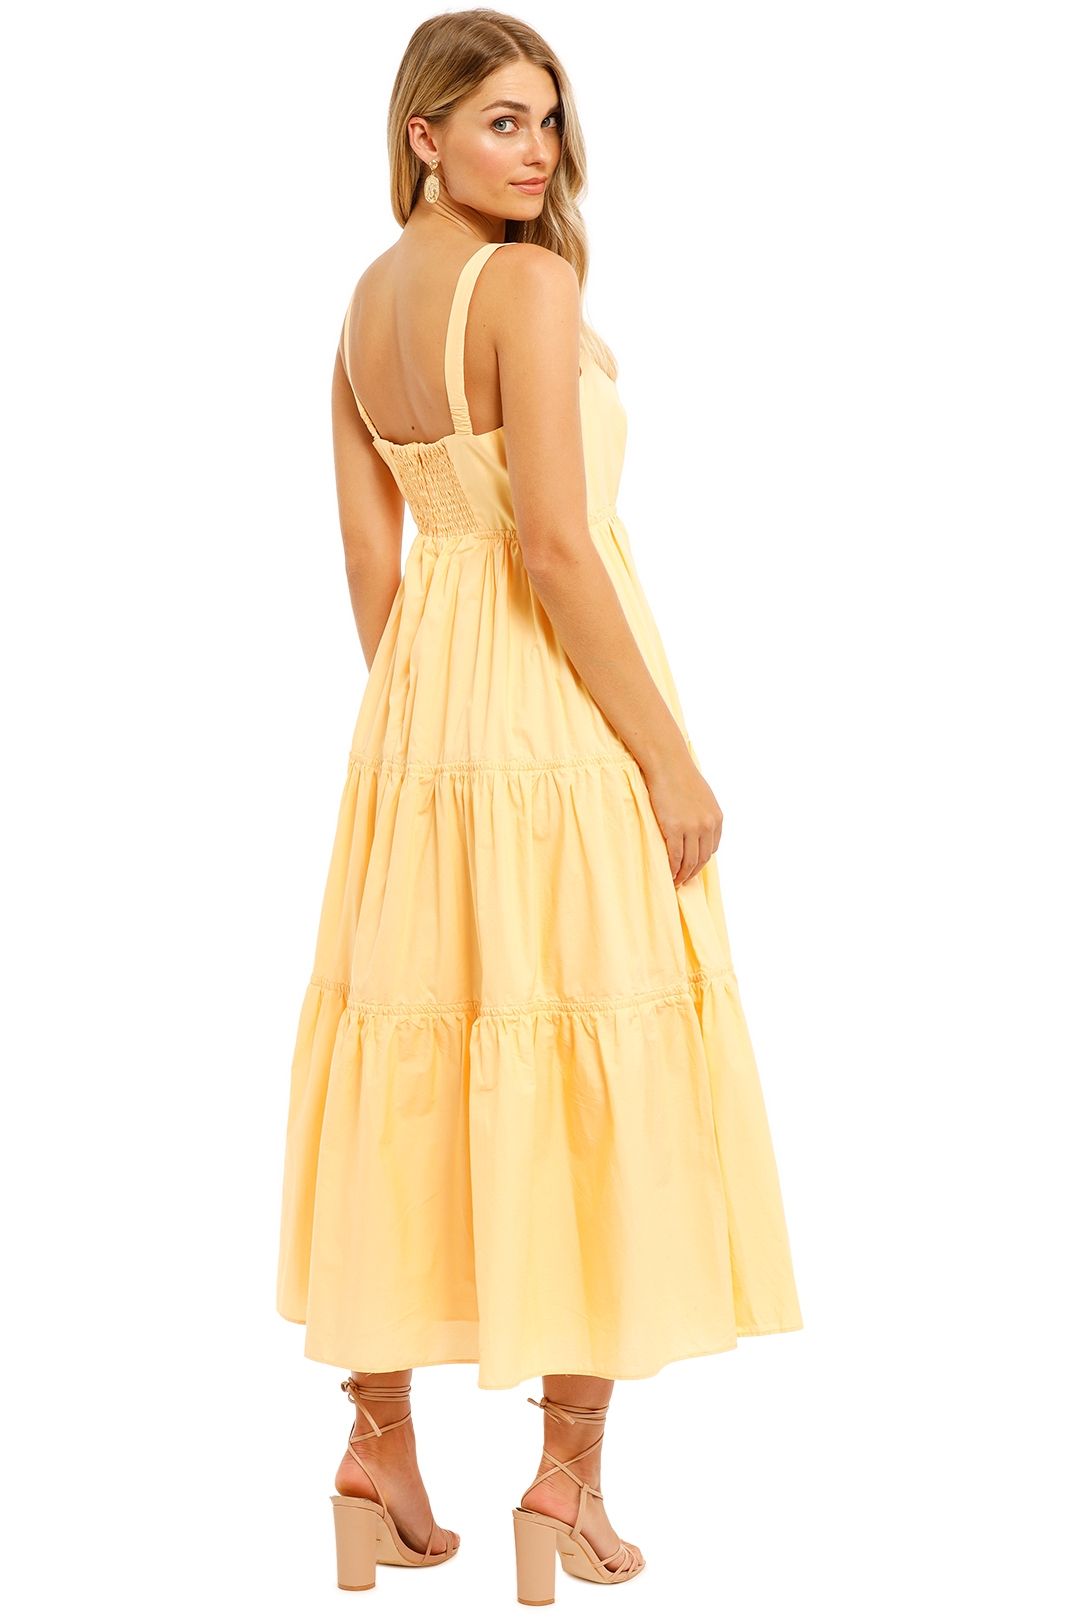 Steele Sorelle Dress Daffodil yellow